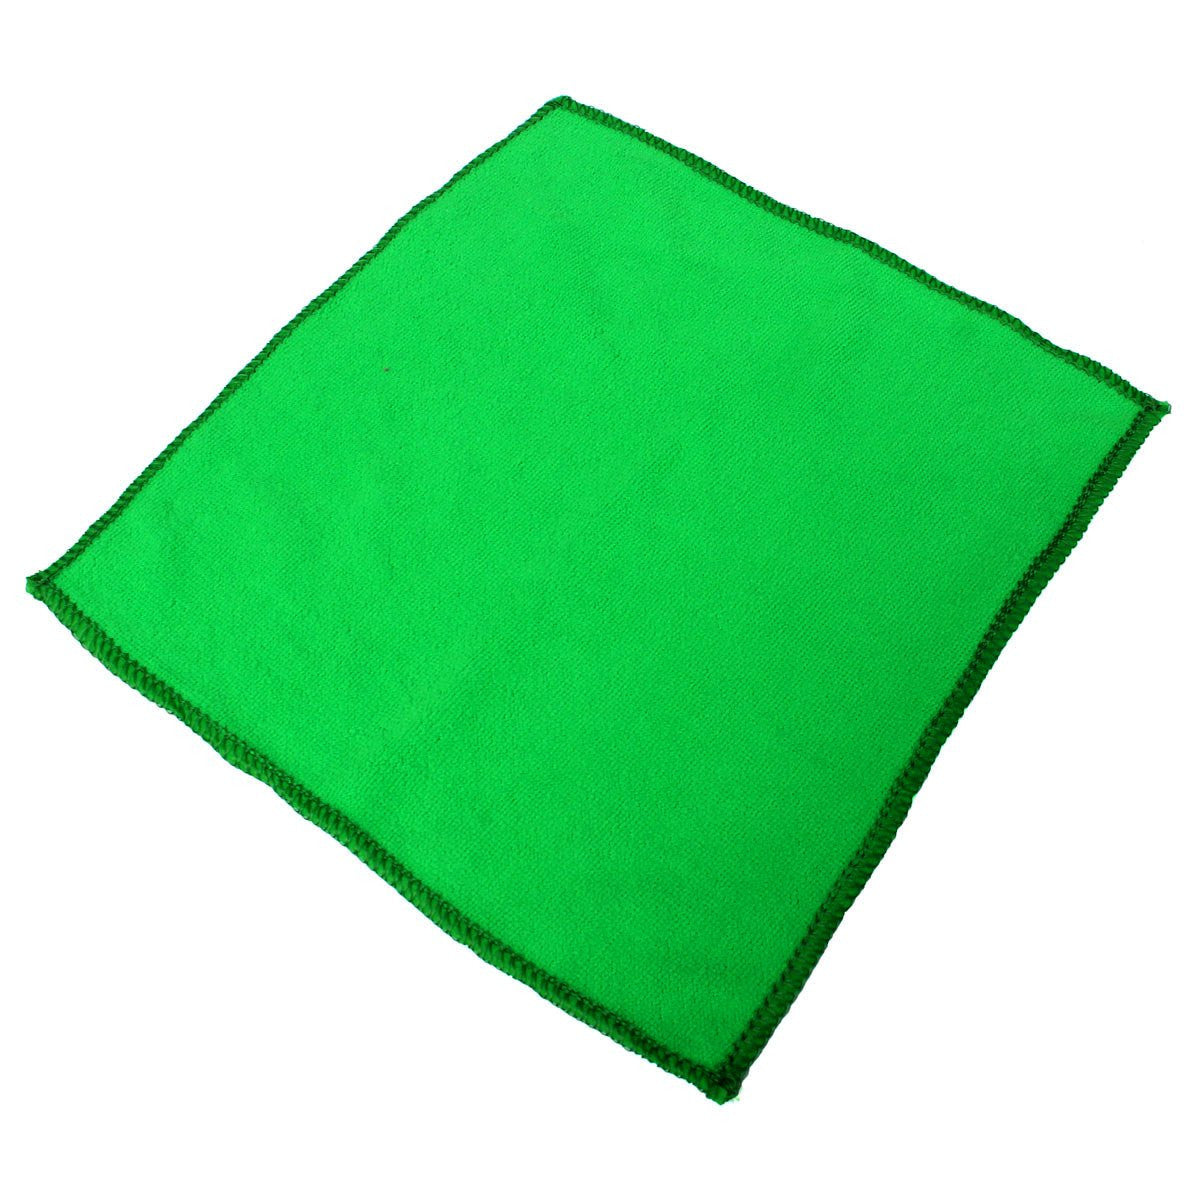 10pcs Soft Cleaning Cloth Green Micro Fiber Car Care Duster Towel 29x29cm - Auto GoShop